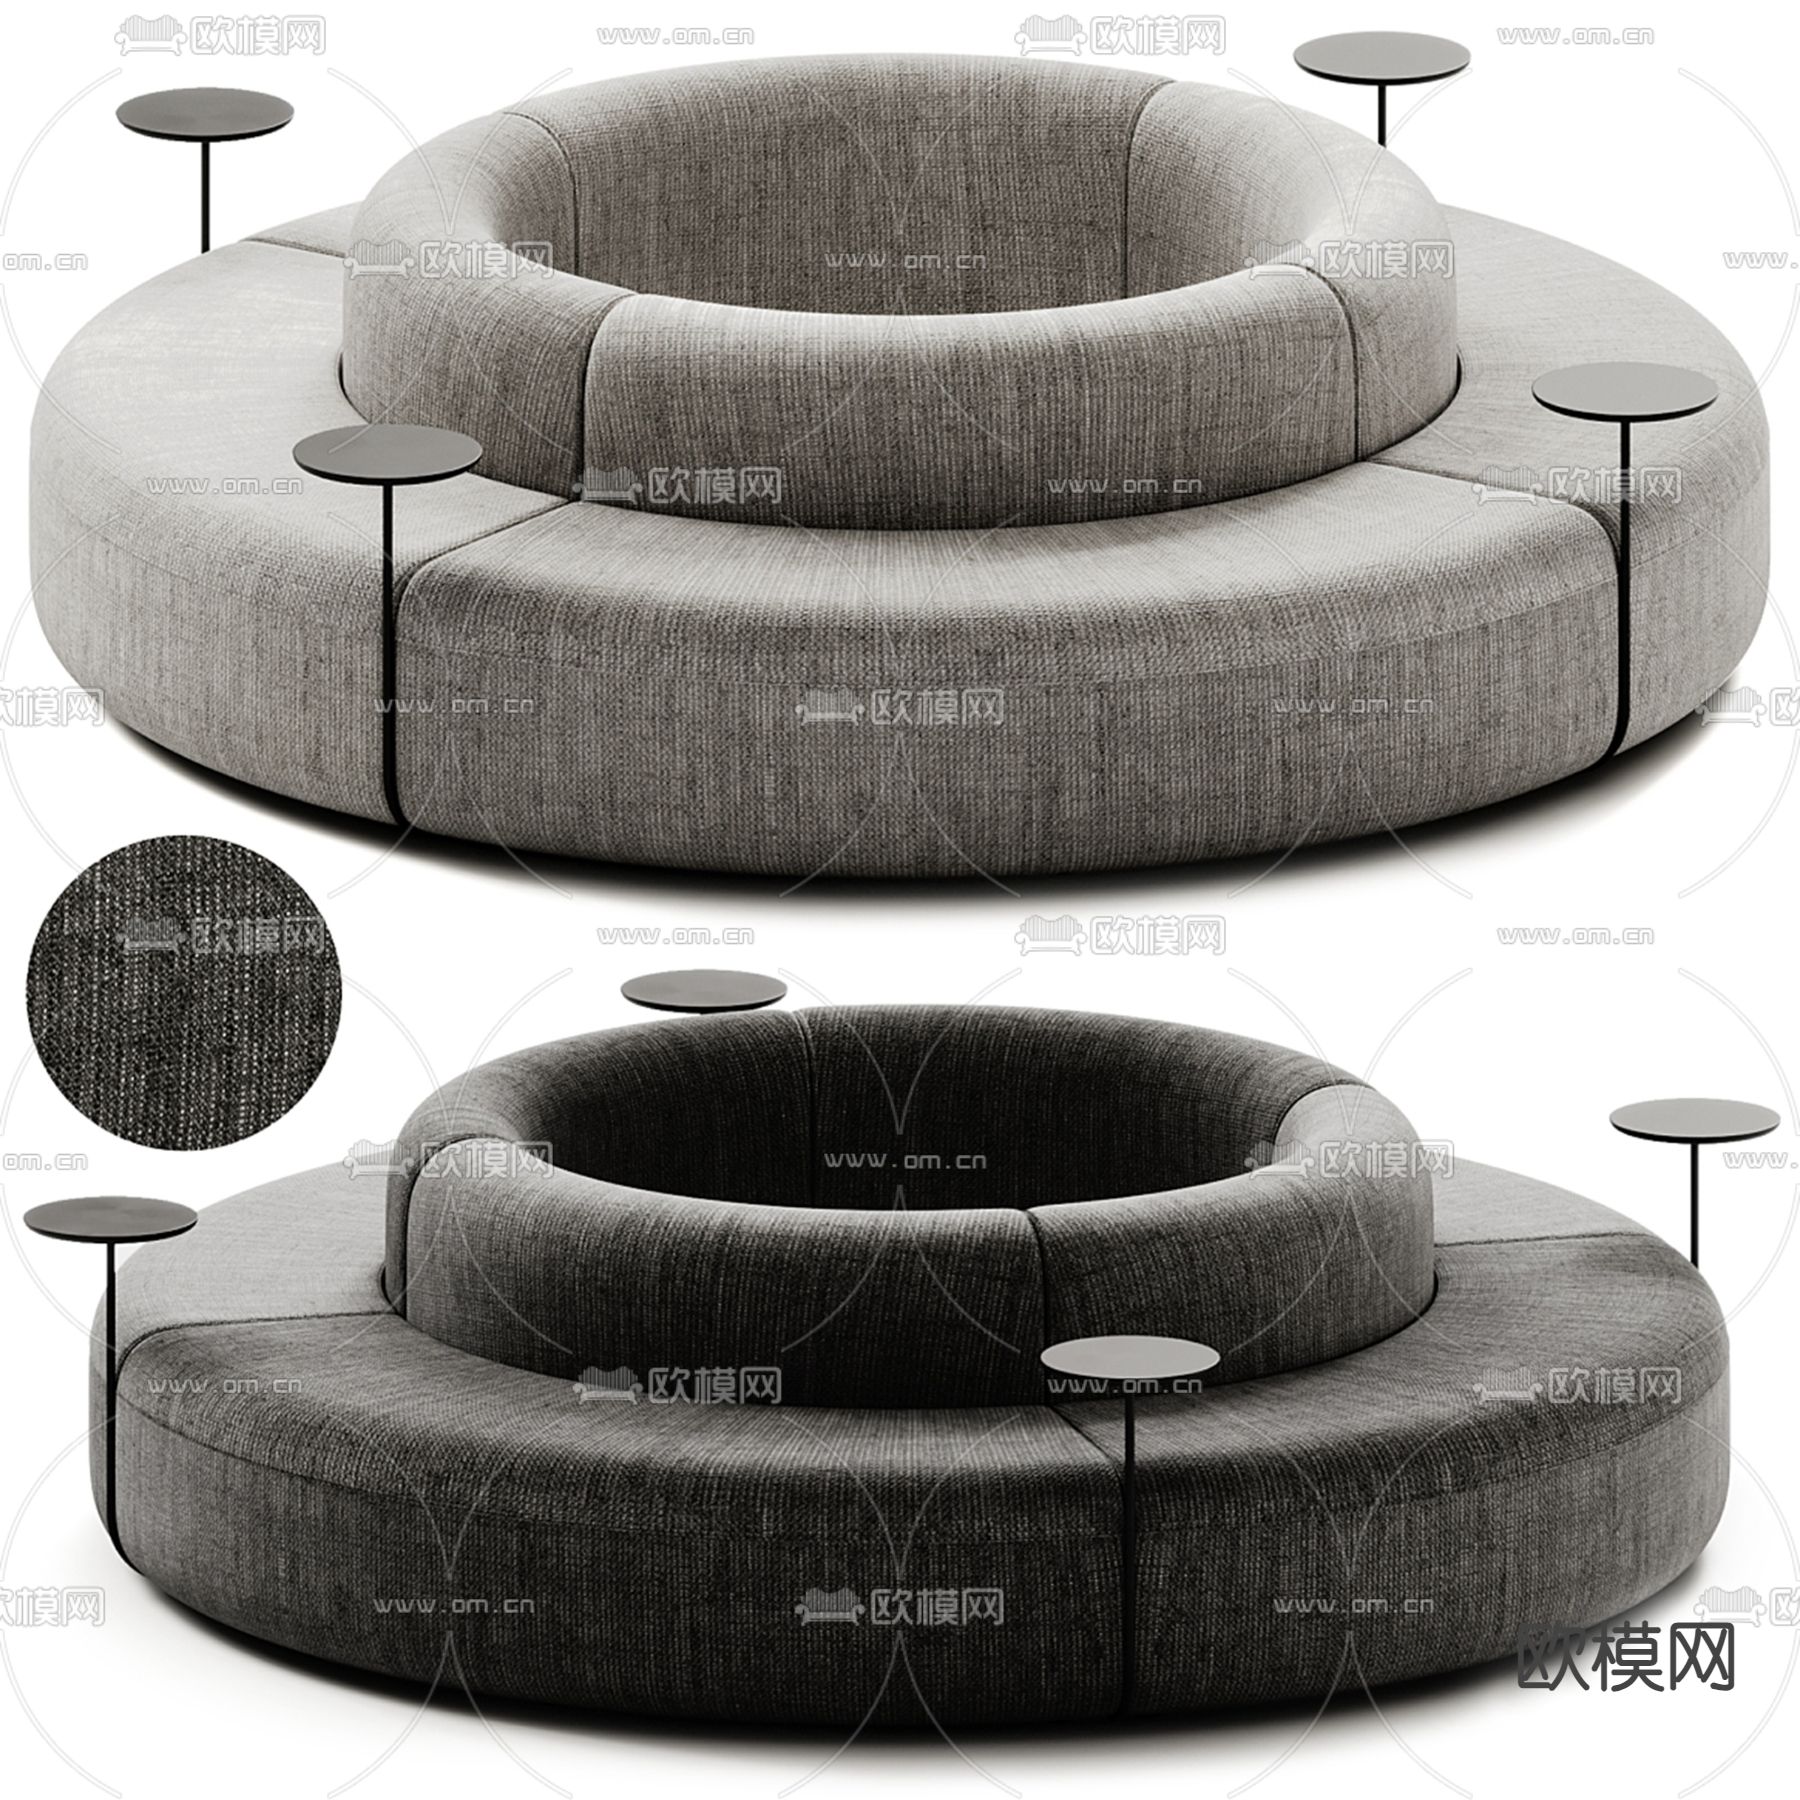 Alpe系列沙发——曲线和圆形的奇妙组合，创造了这个有趣的设计！ - 普象网